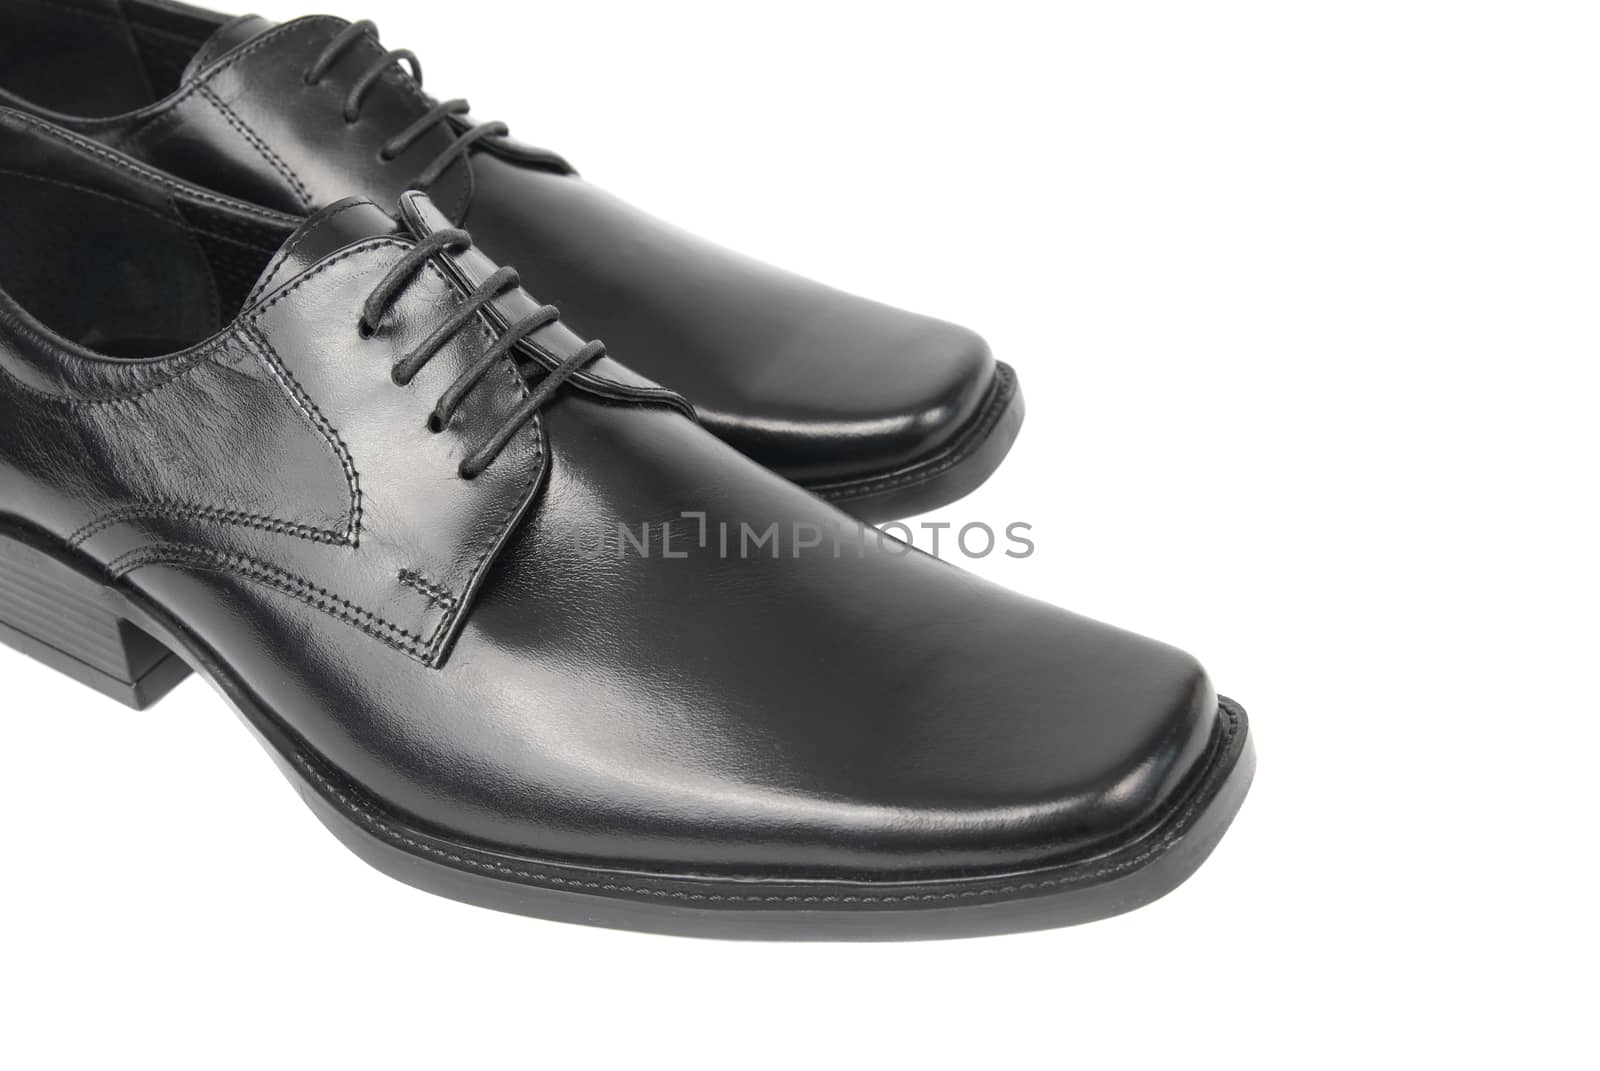 Pair of man's black shoes by vapi